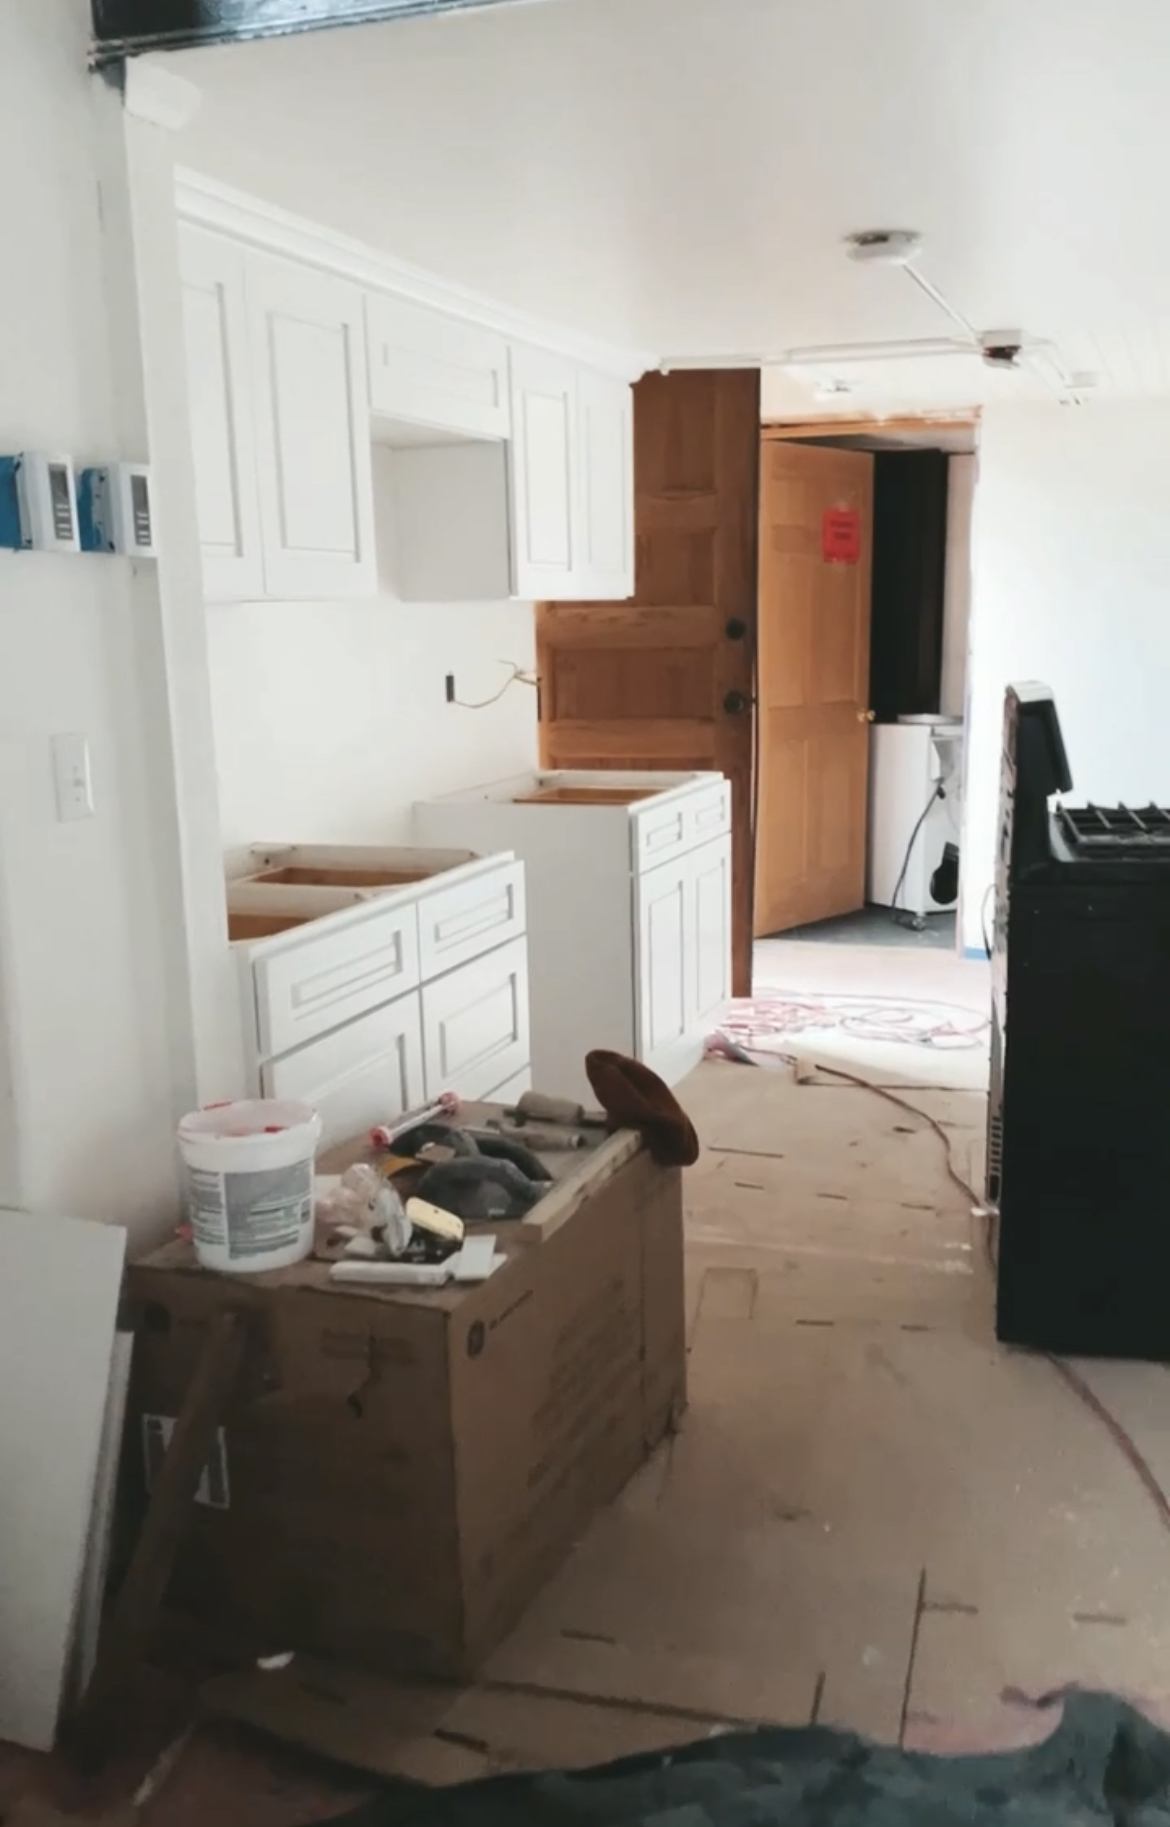 loft apartment kitchen renovation ideas